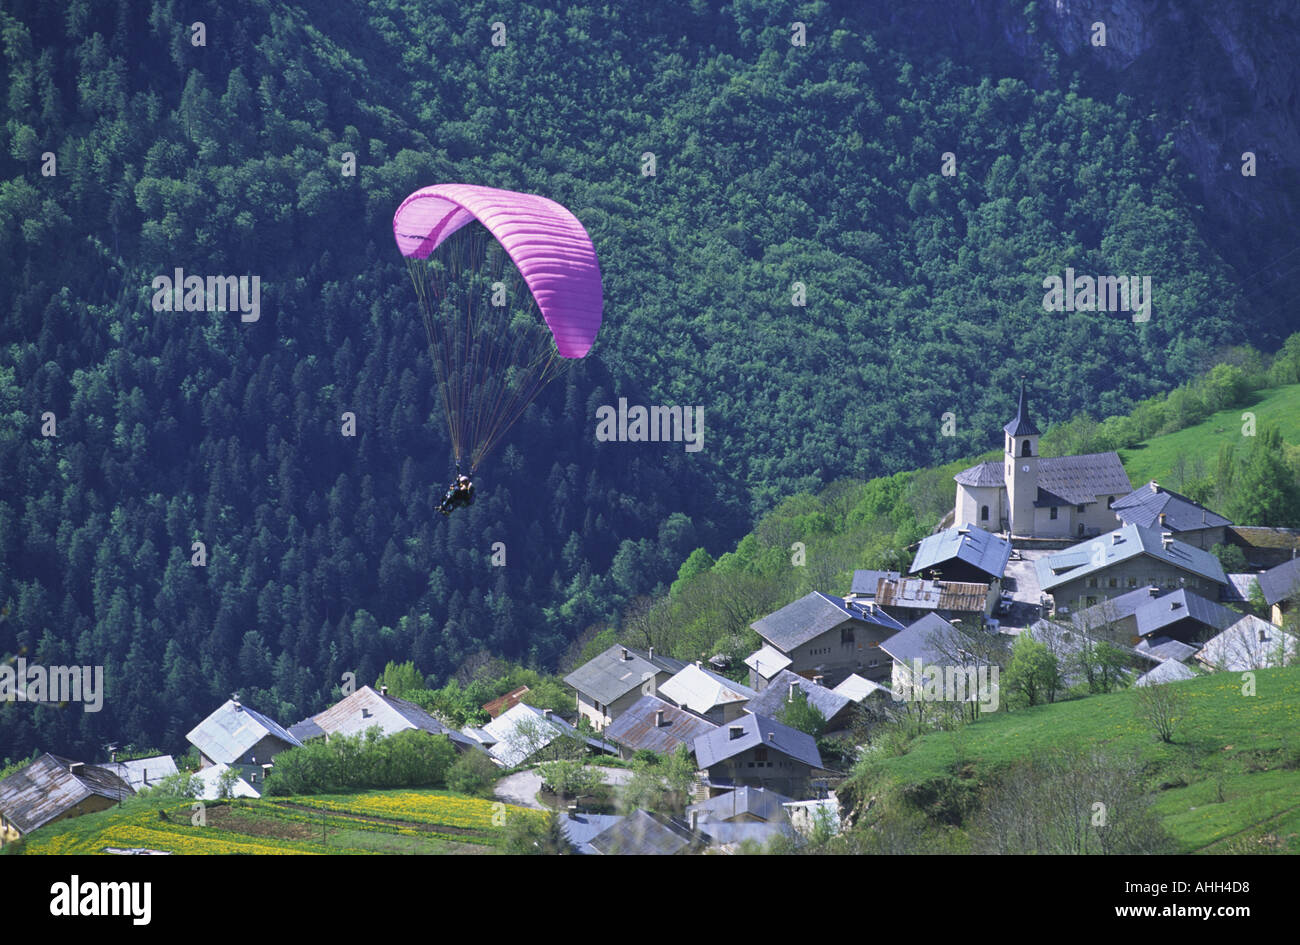 Un parapendio vola sopra un villaggio savoiardo savoie sulle alpi francesi francia Foto Stock